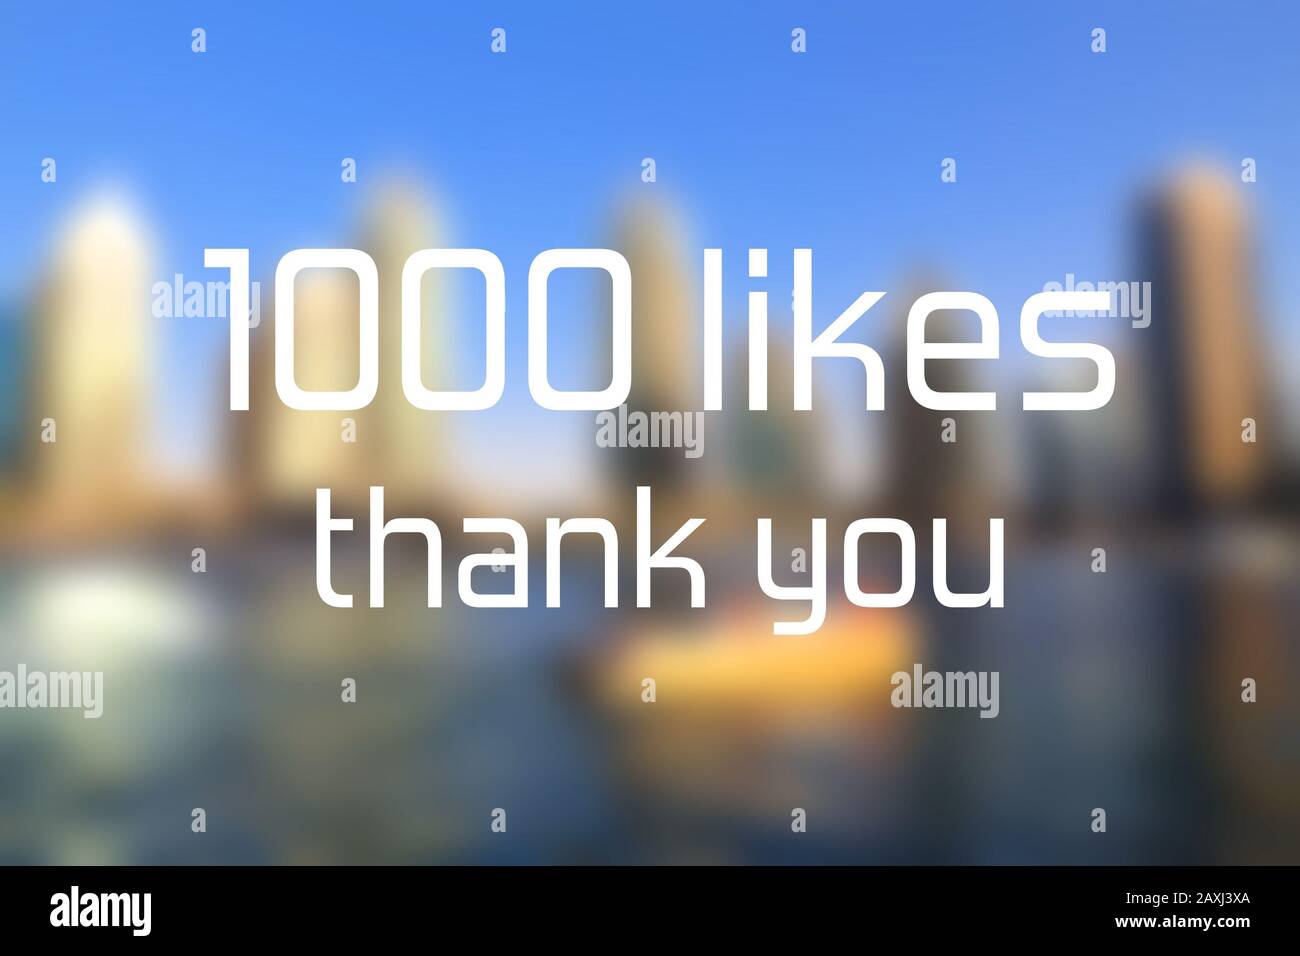 1000 likes. Social media achievement. Thank you sign. Stock Photo